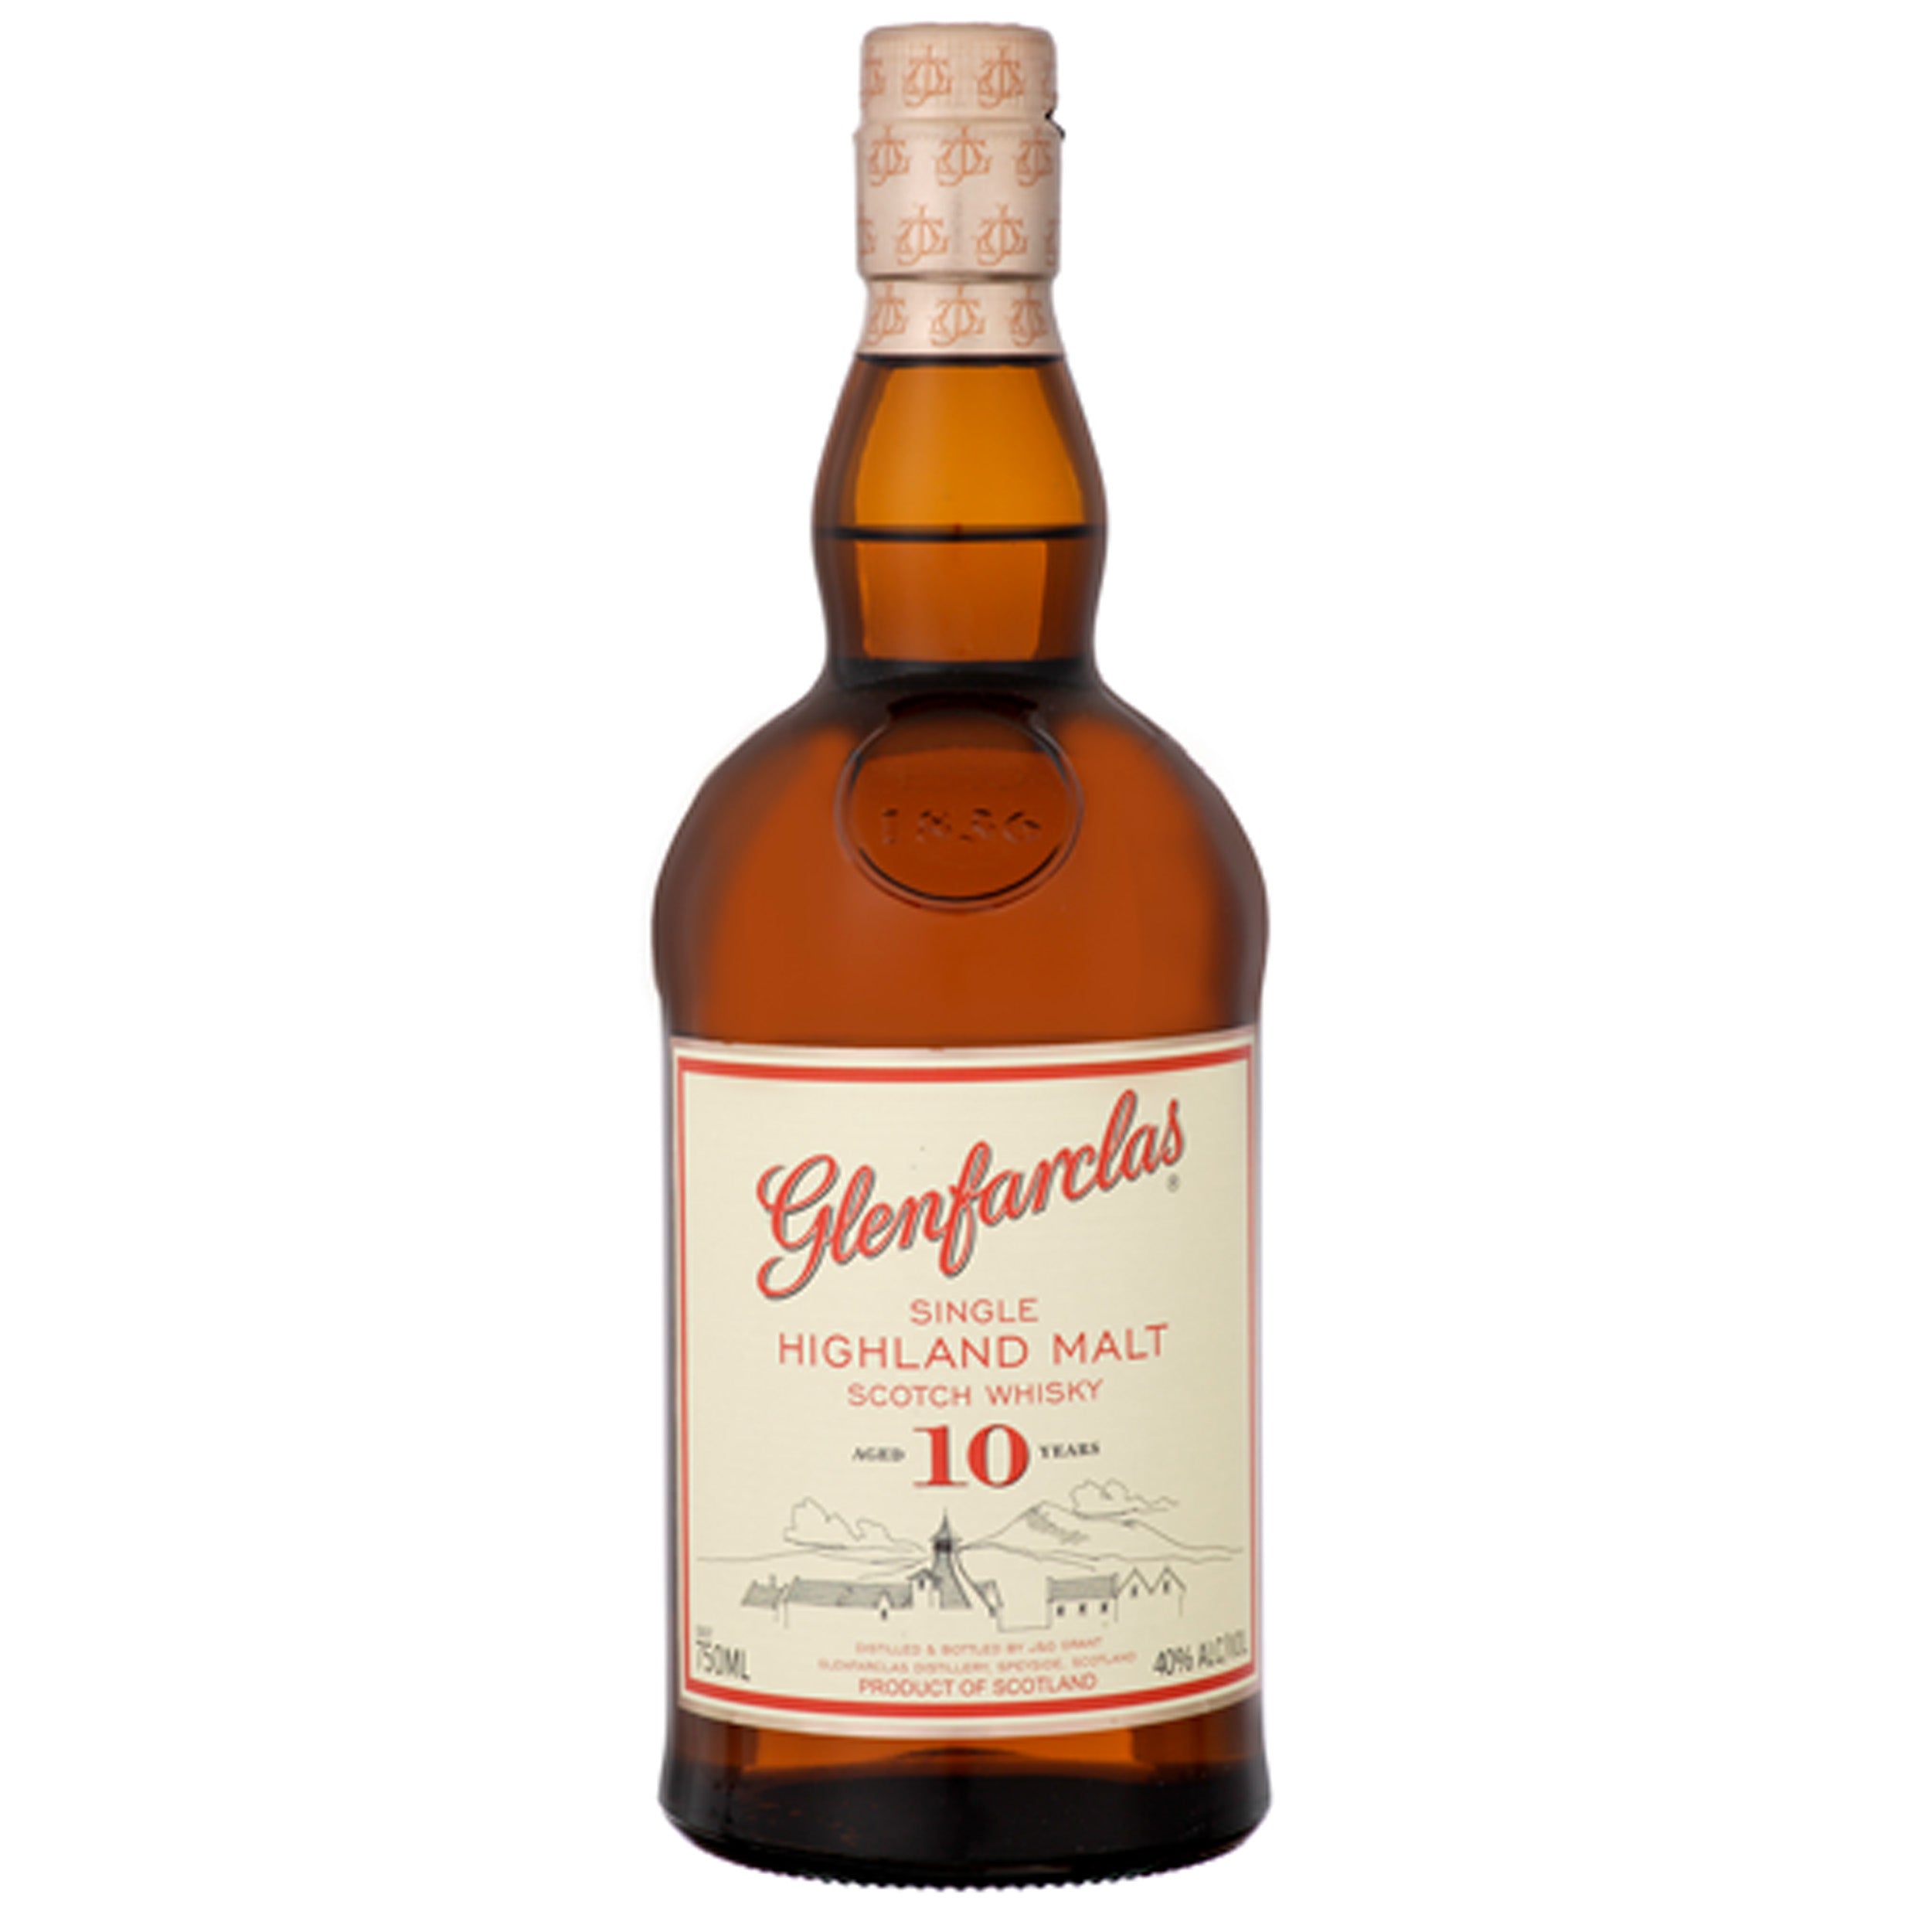 Glenfarclas 10 Year Single Malt Scotch Whisky